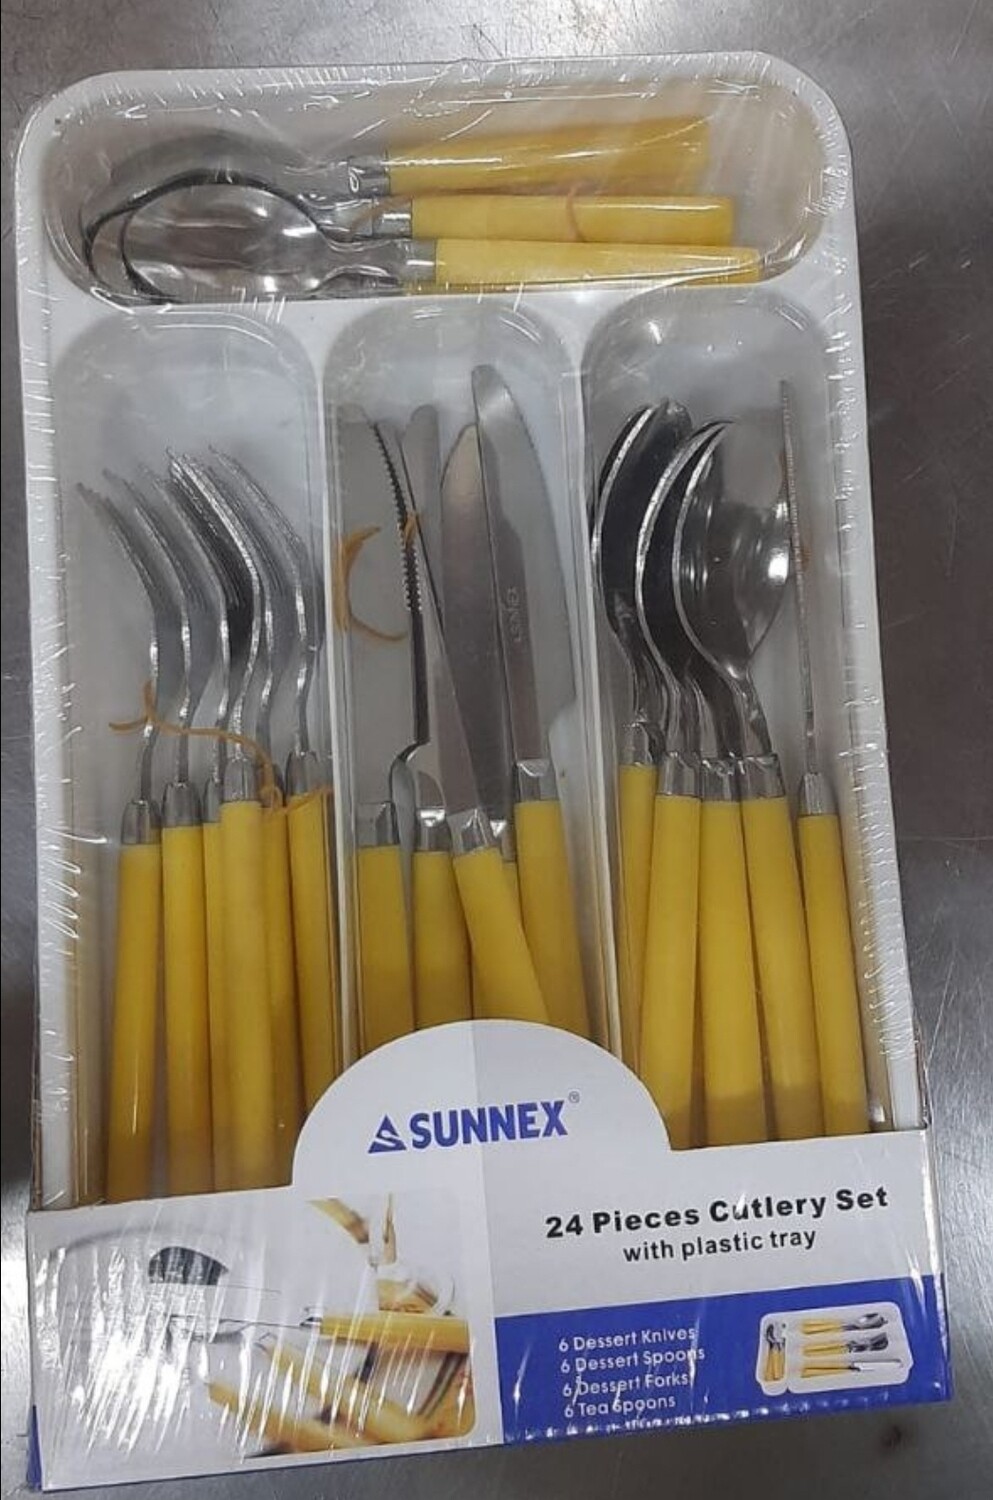 Sunnex 24pcs cutlery set with plastic tray